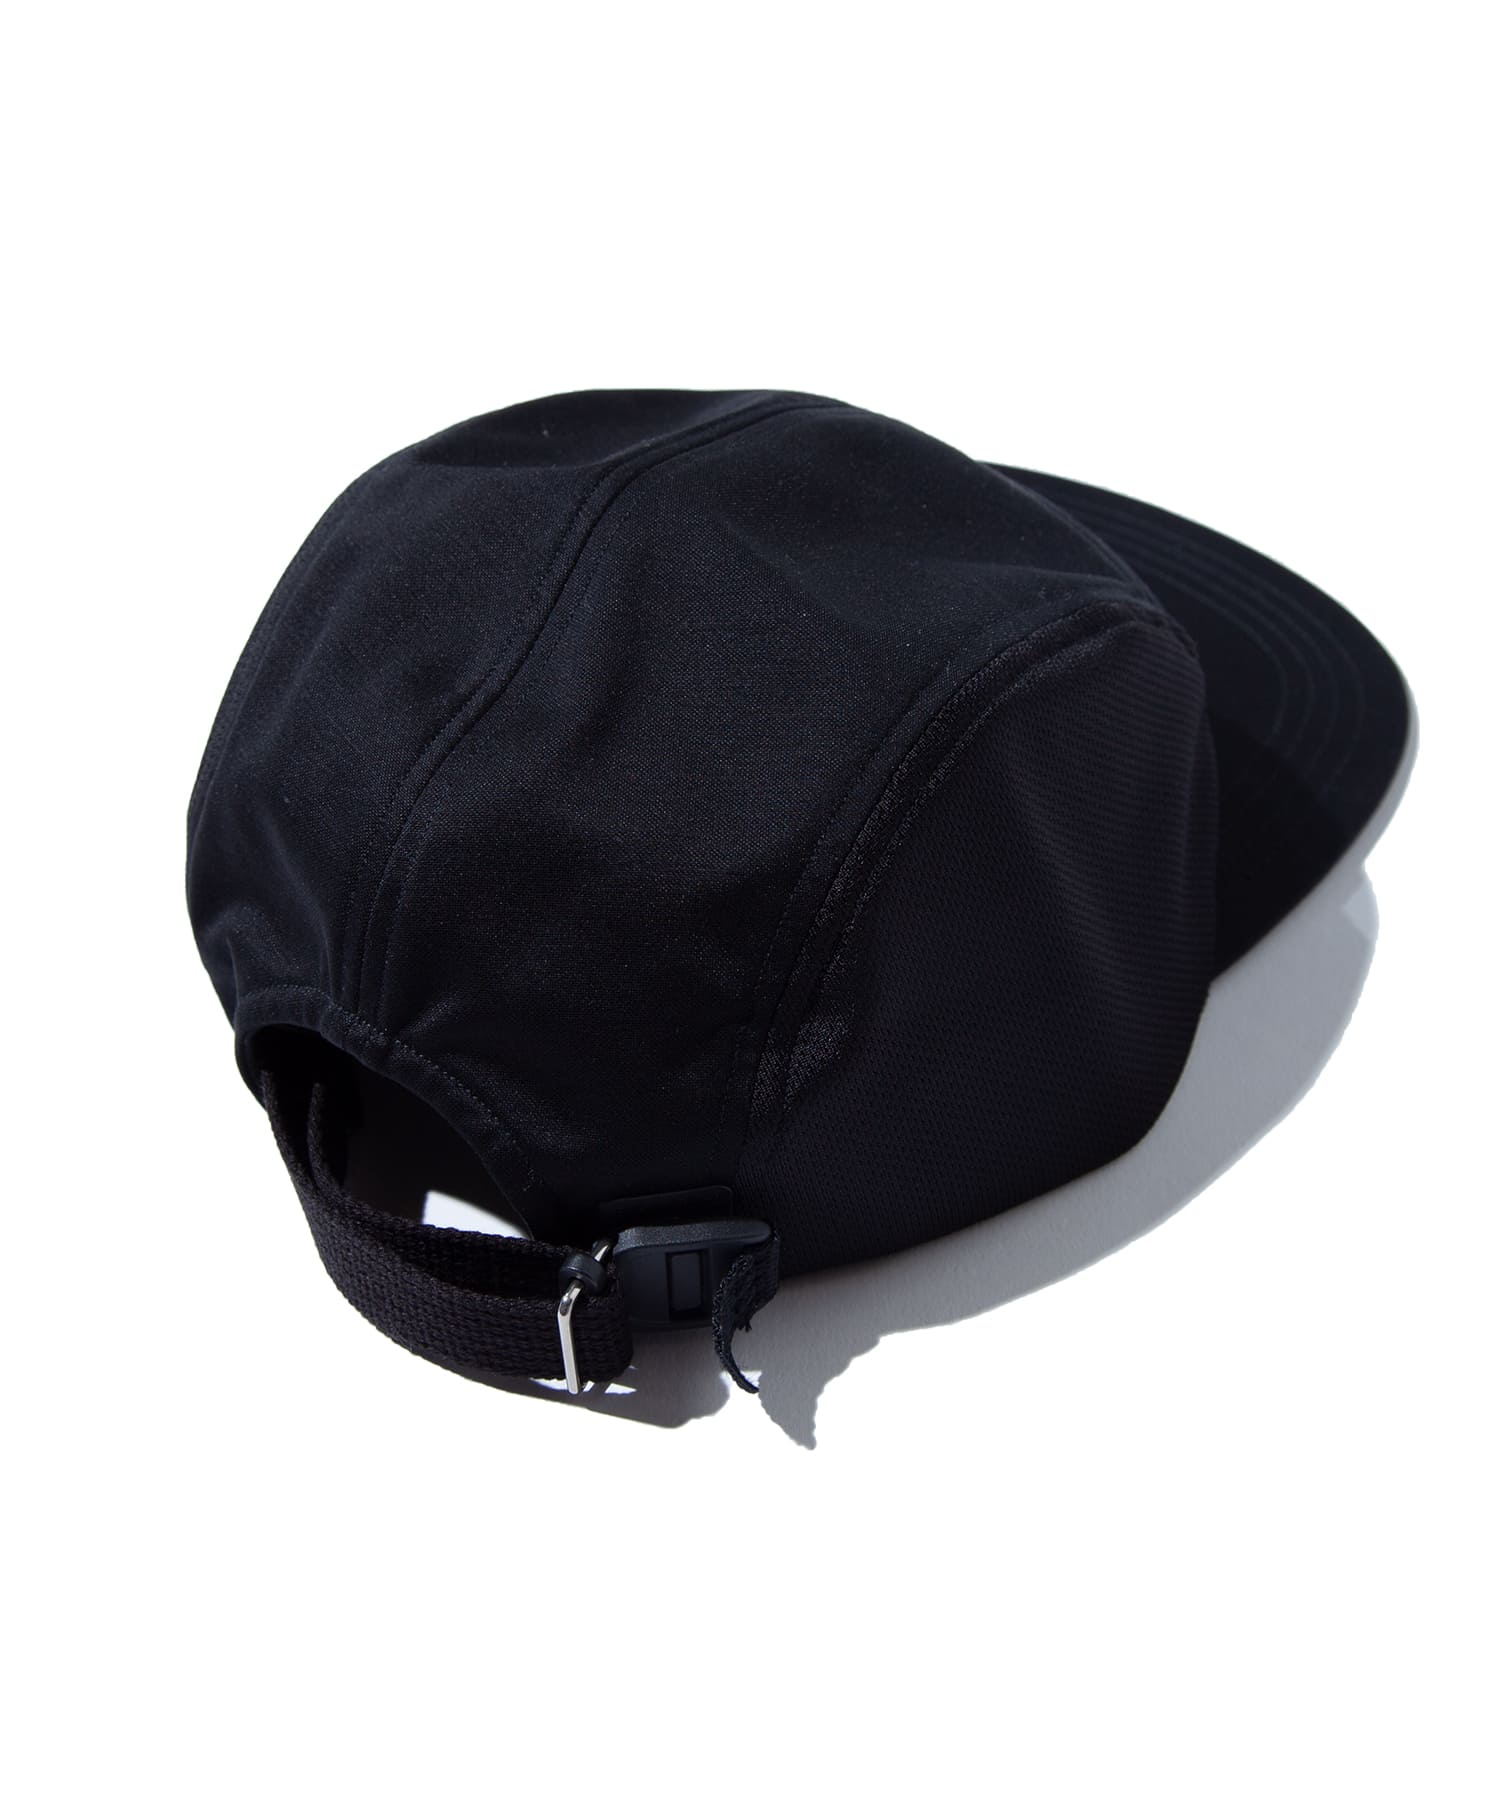 COMESANDGOES Jet cap 黒 - 帽子